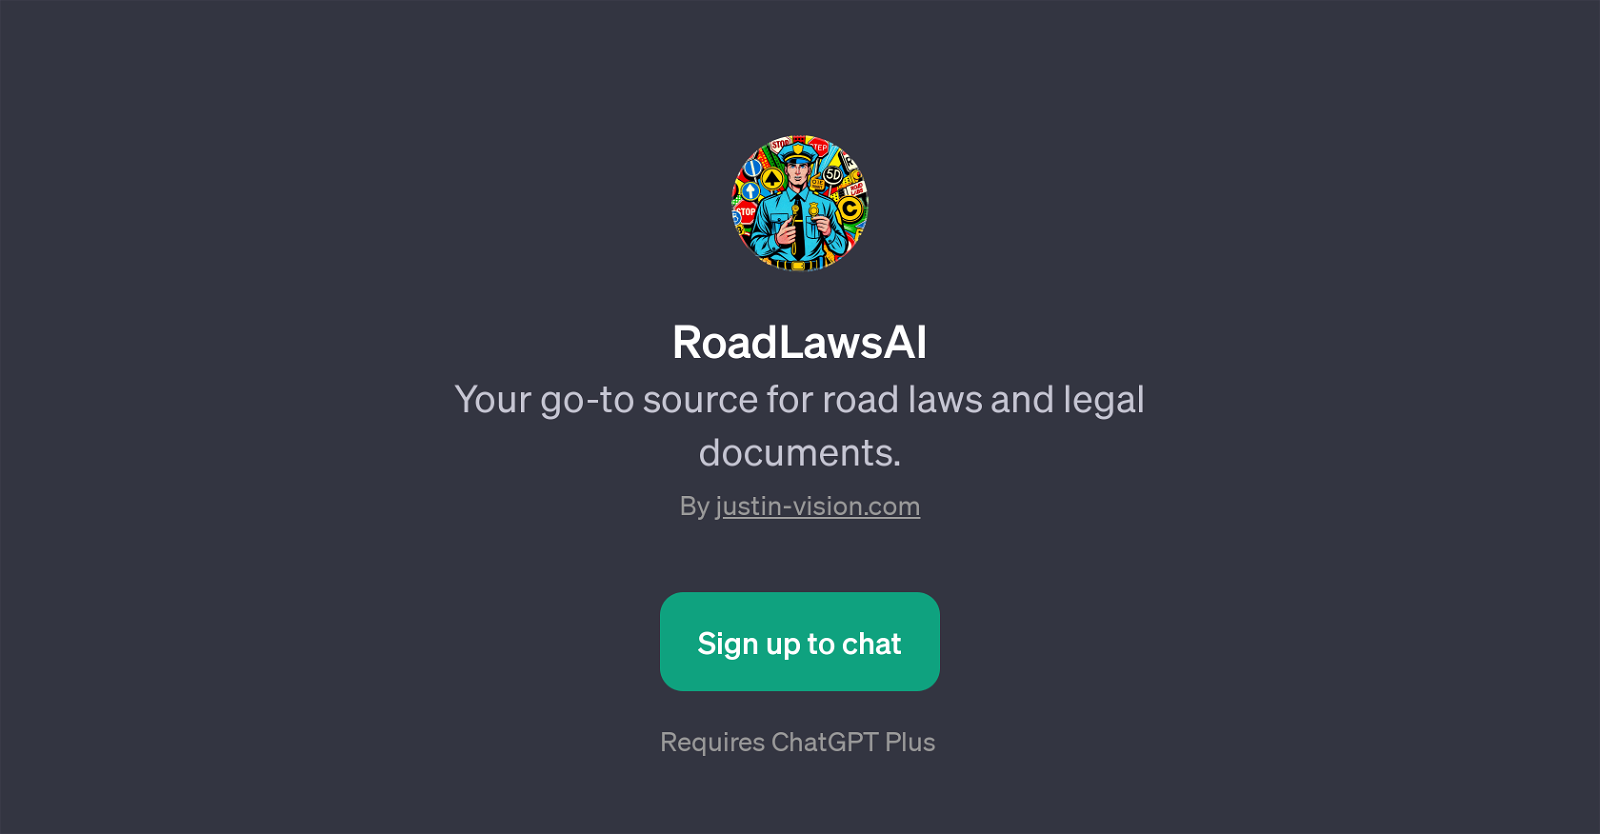 RoadLawsAI website